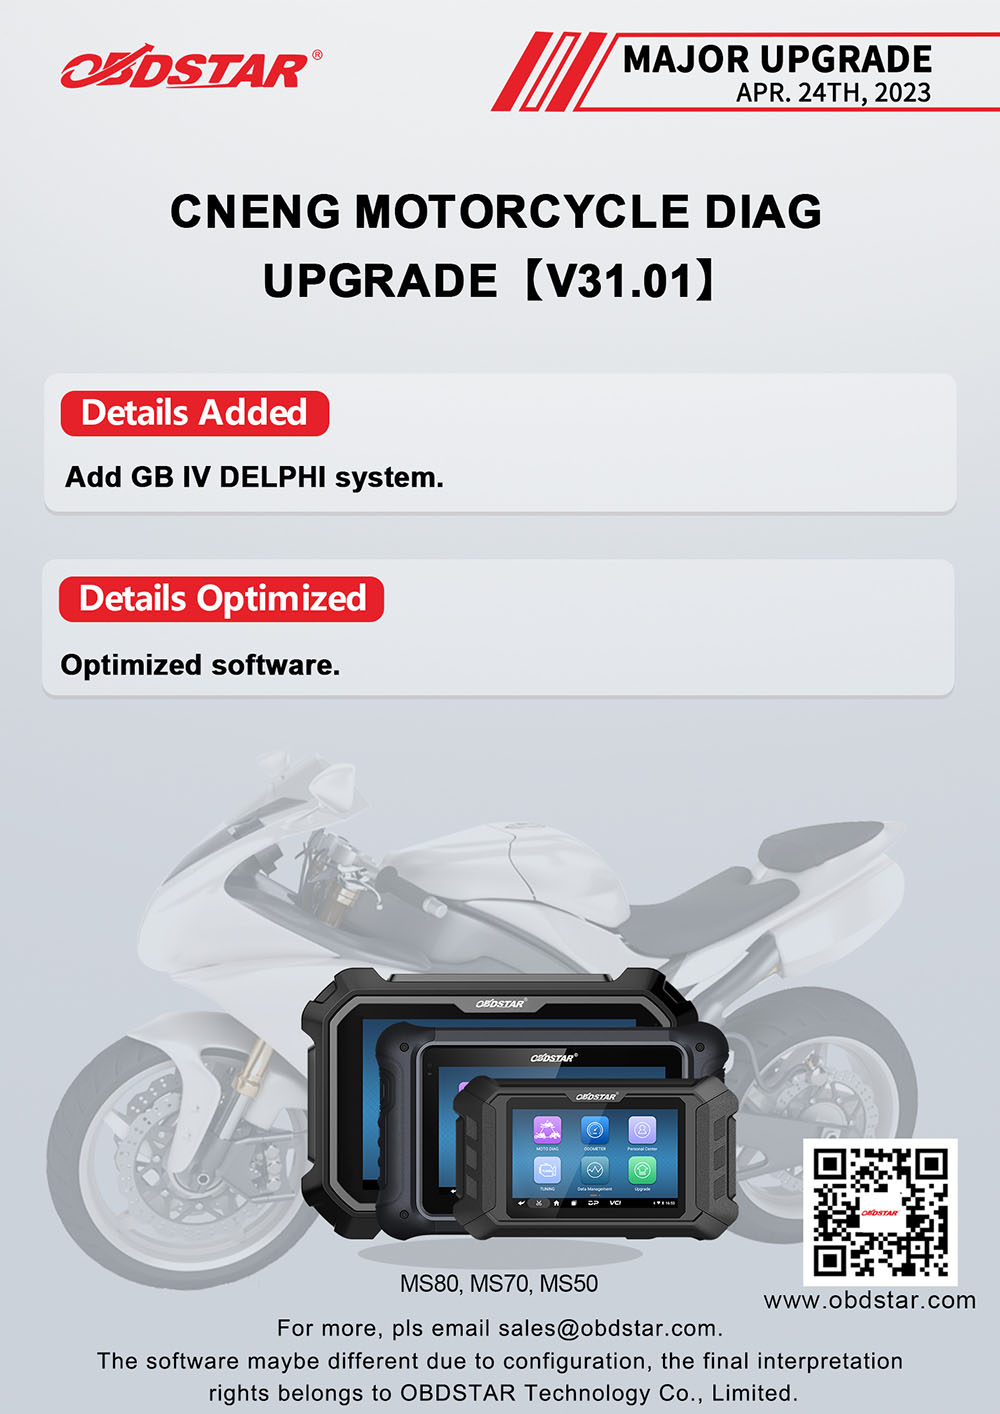 CNENG MOTORCYCLE UPGRADE V31.01